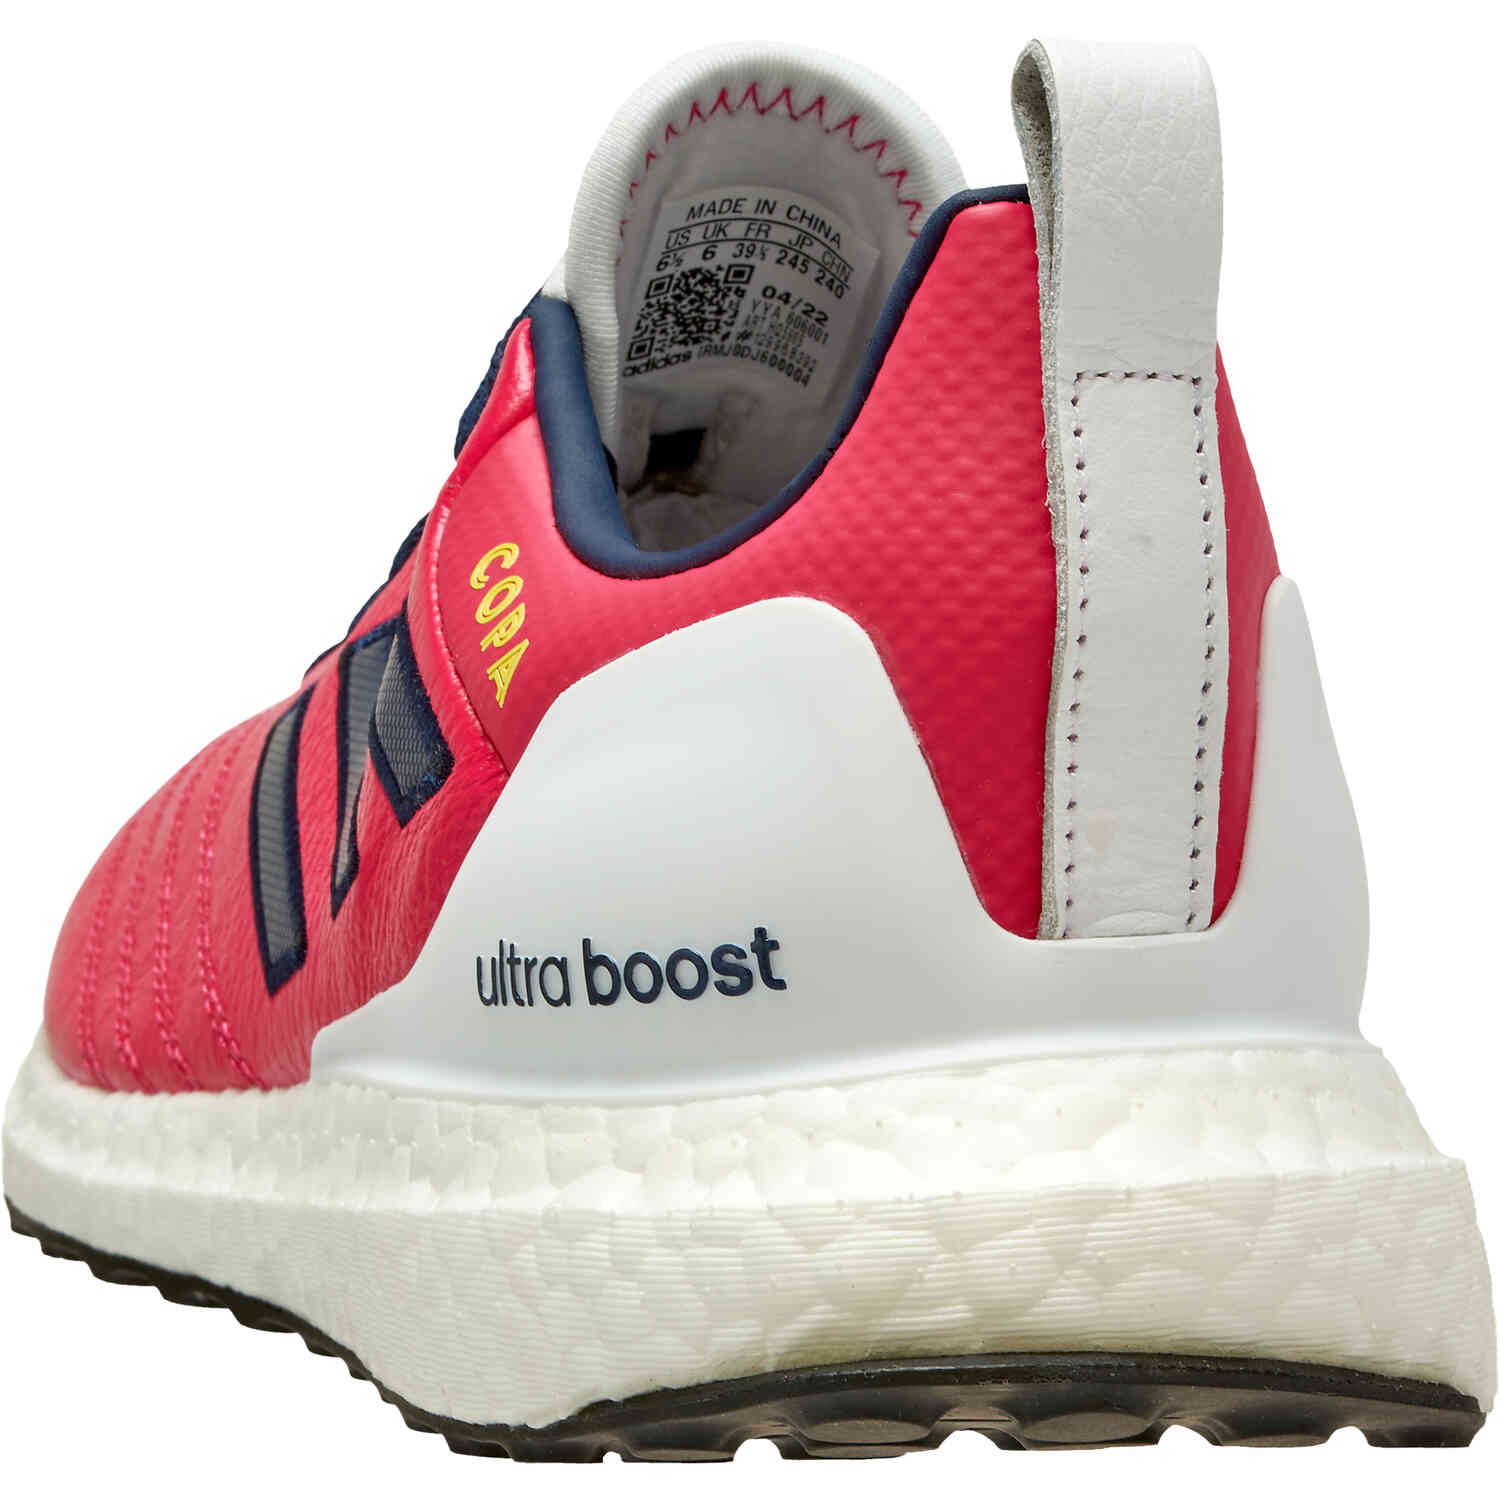 Adidas MLS Copa Ultraboost Shoes - New York City FC - 9